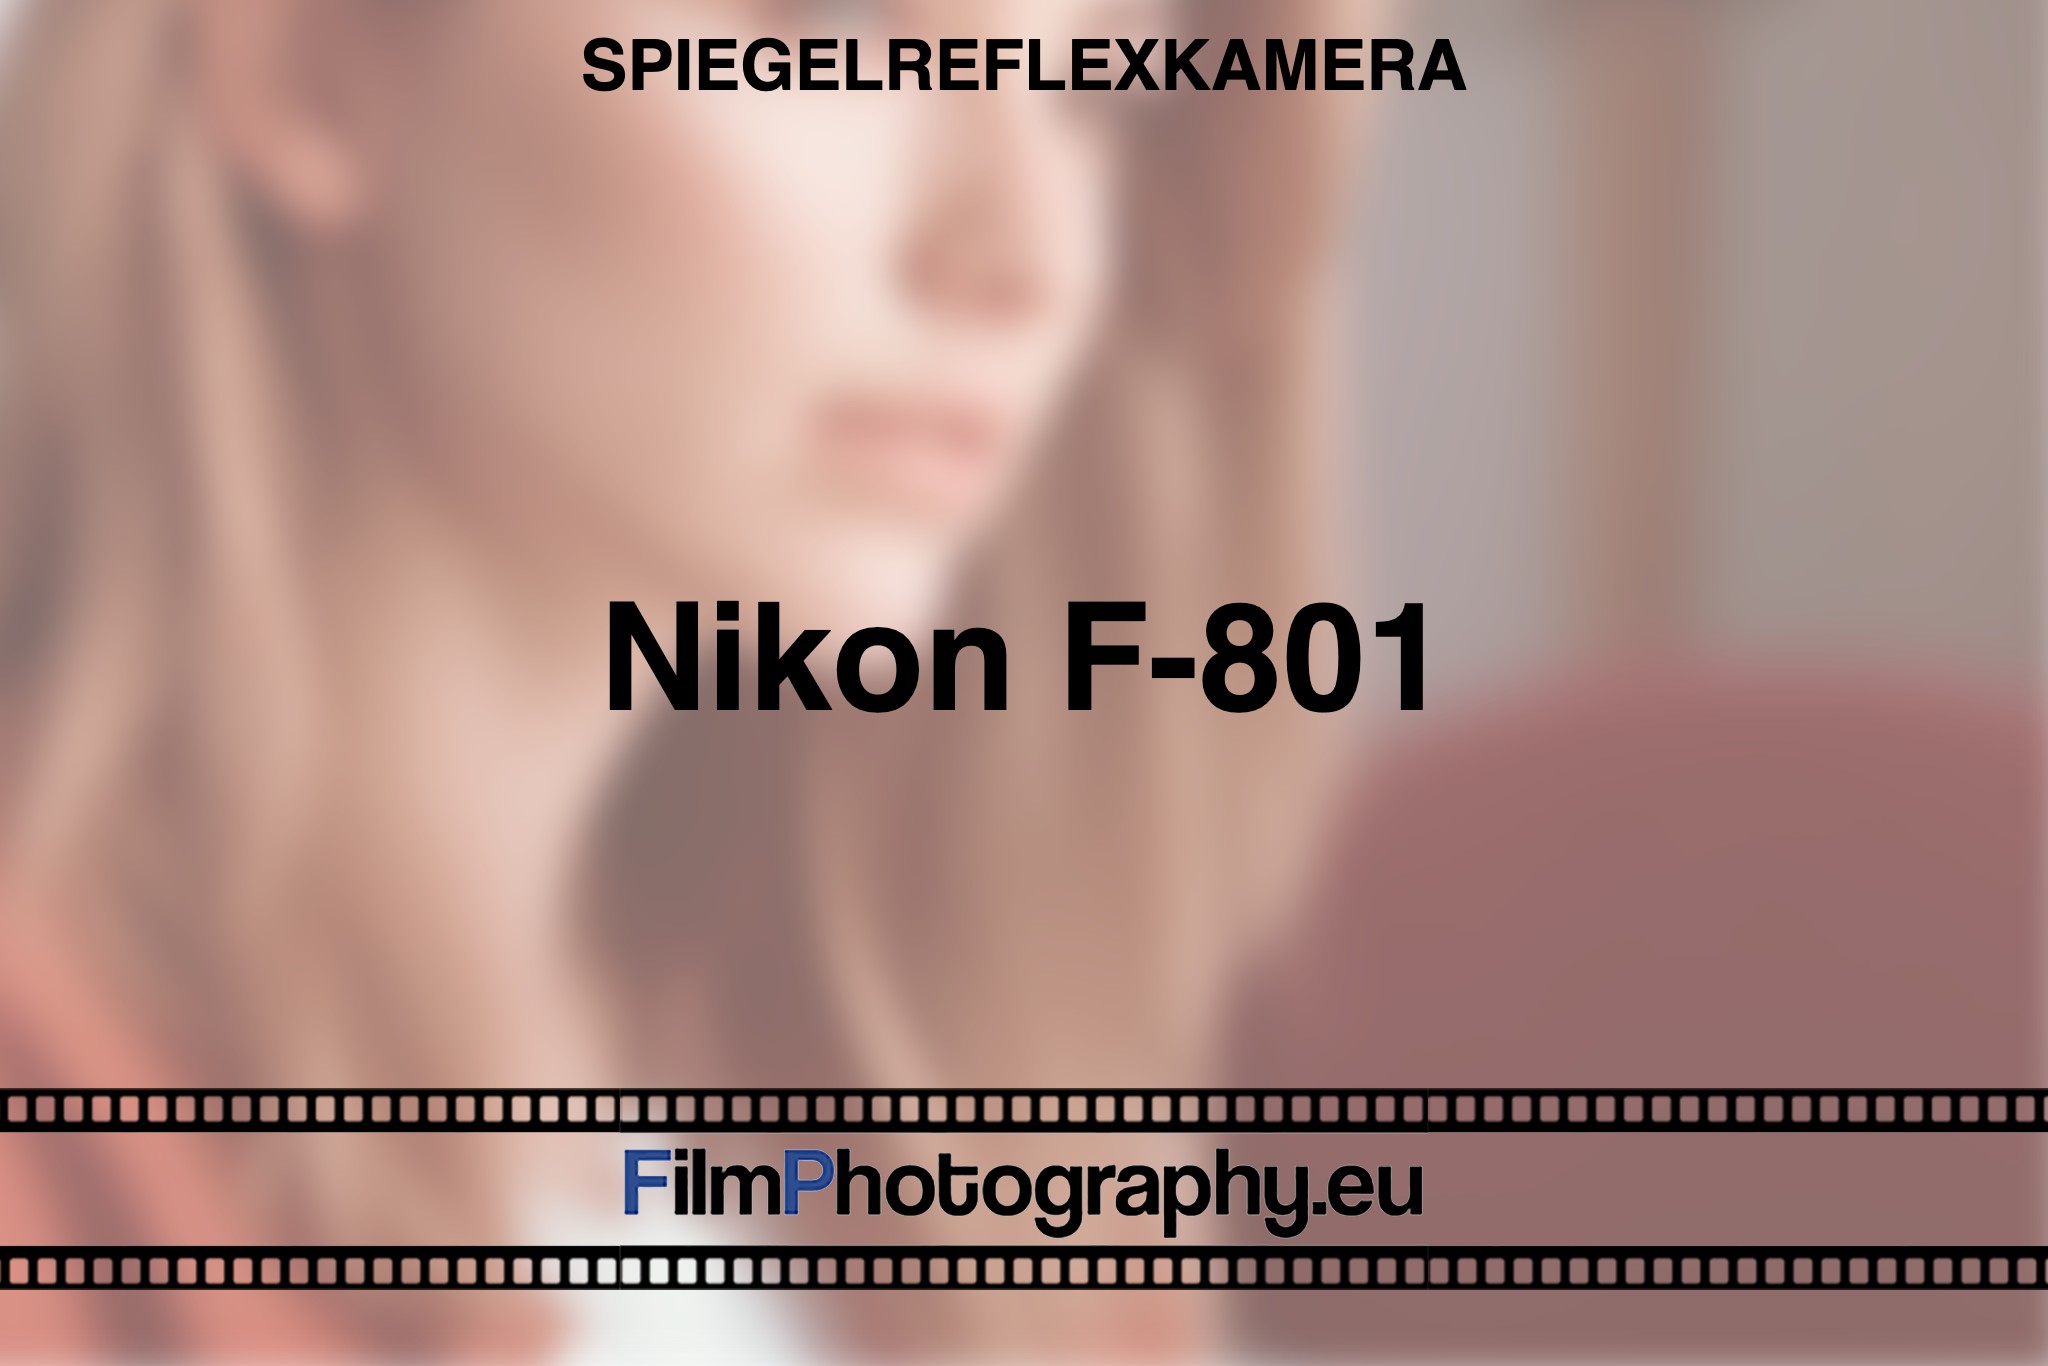 nikon-f-801-spiegelreflexkamera-bnv